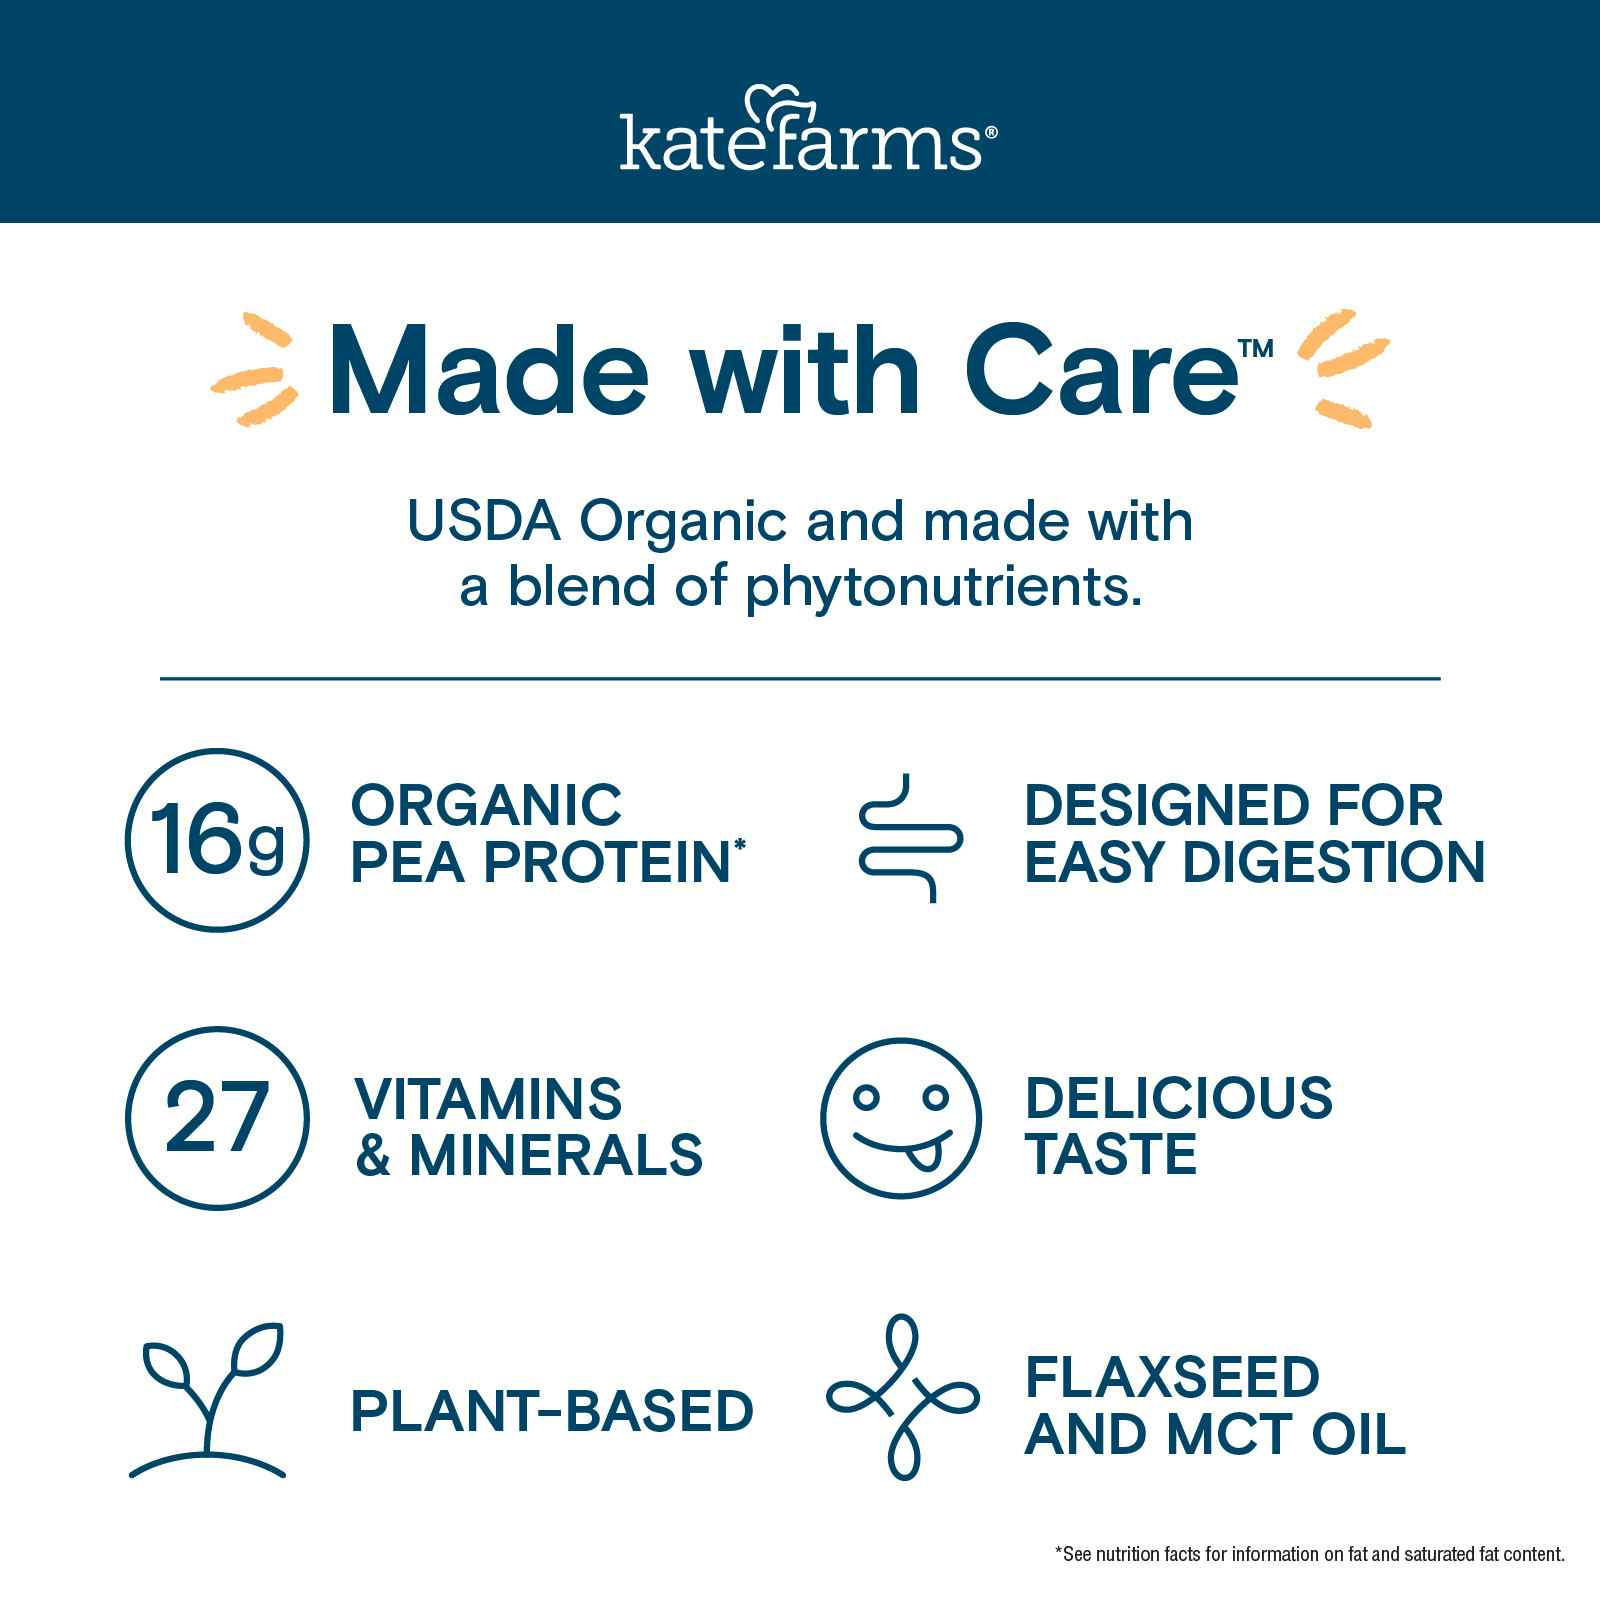 Kate Farms Nutrition Shake, Vanilla, 11 oz.